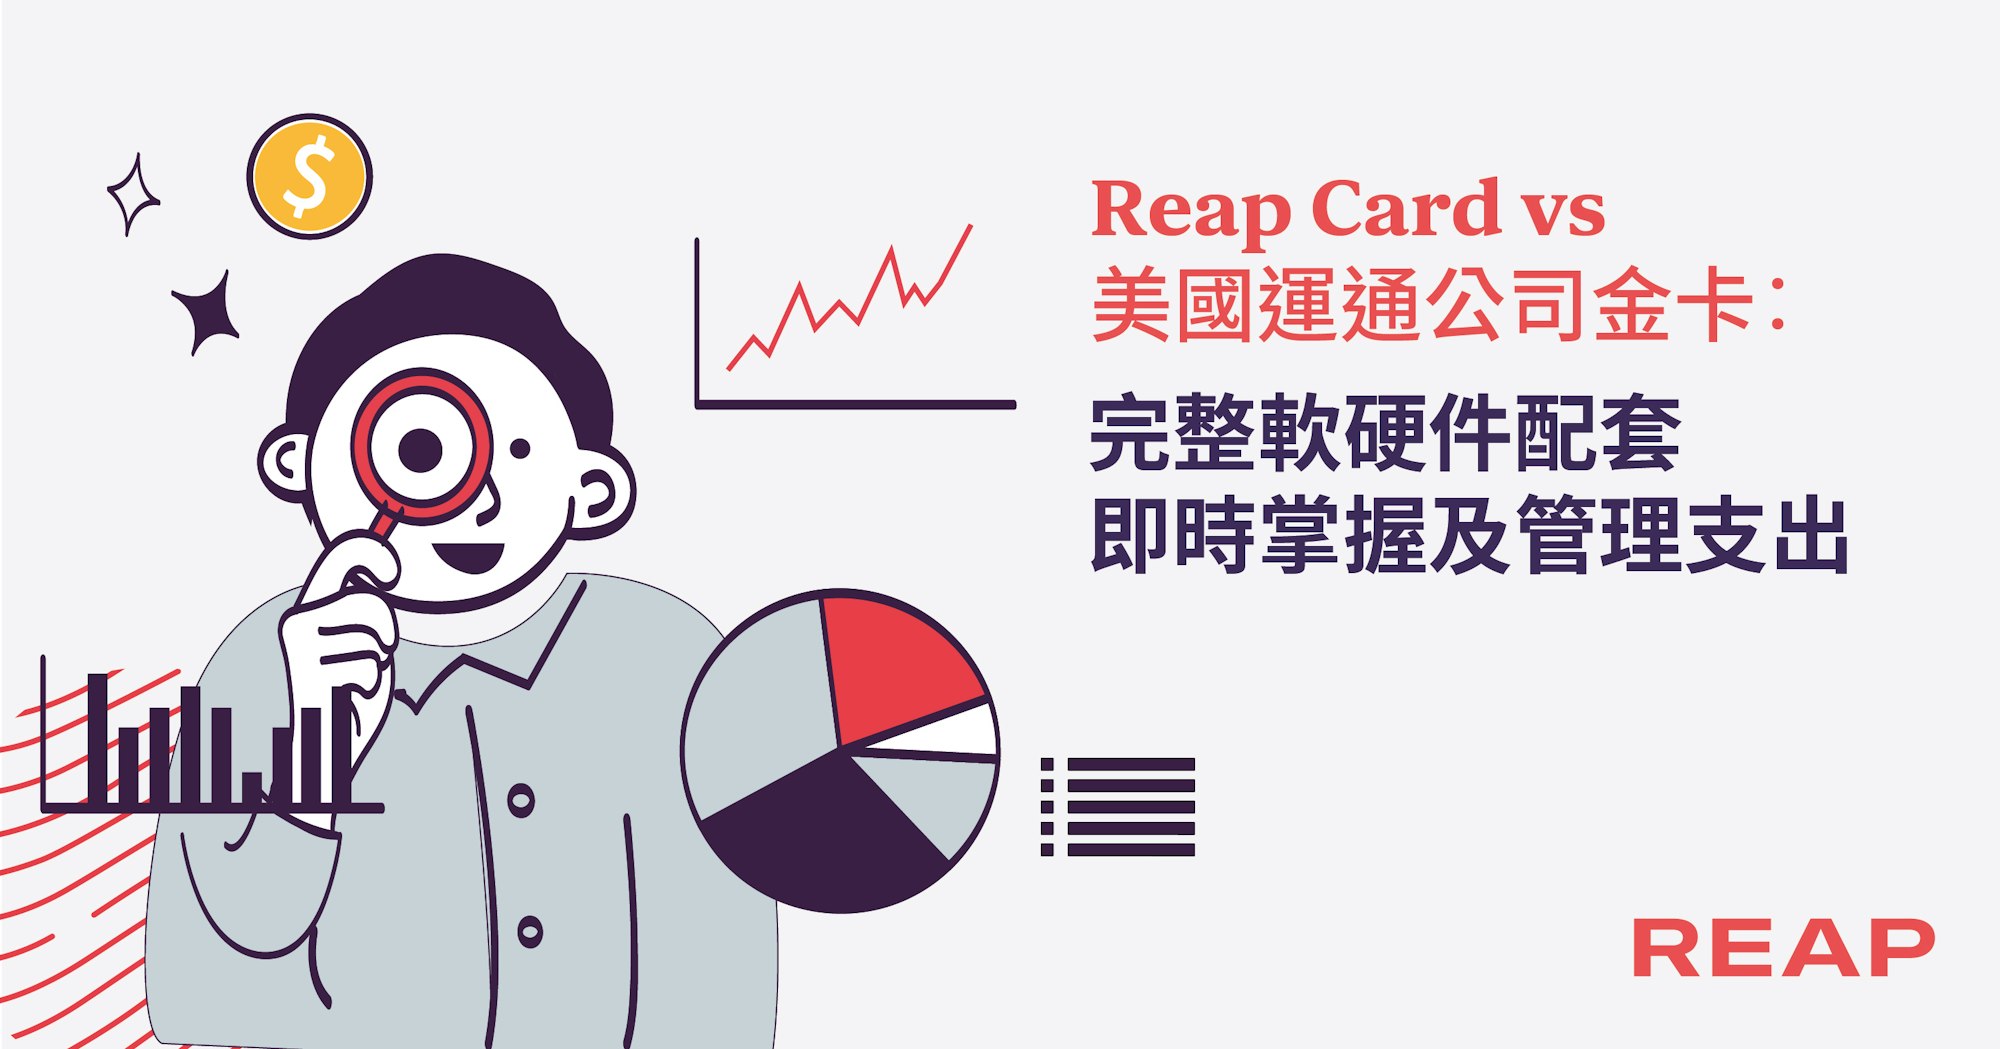 Cover Image for Reap Card vs 美國運通商務金卡：更完整軟硬件配套 即時掌握及管理支出